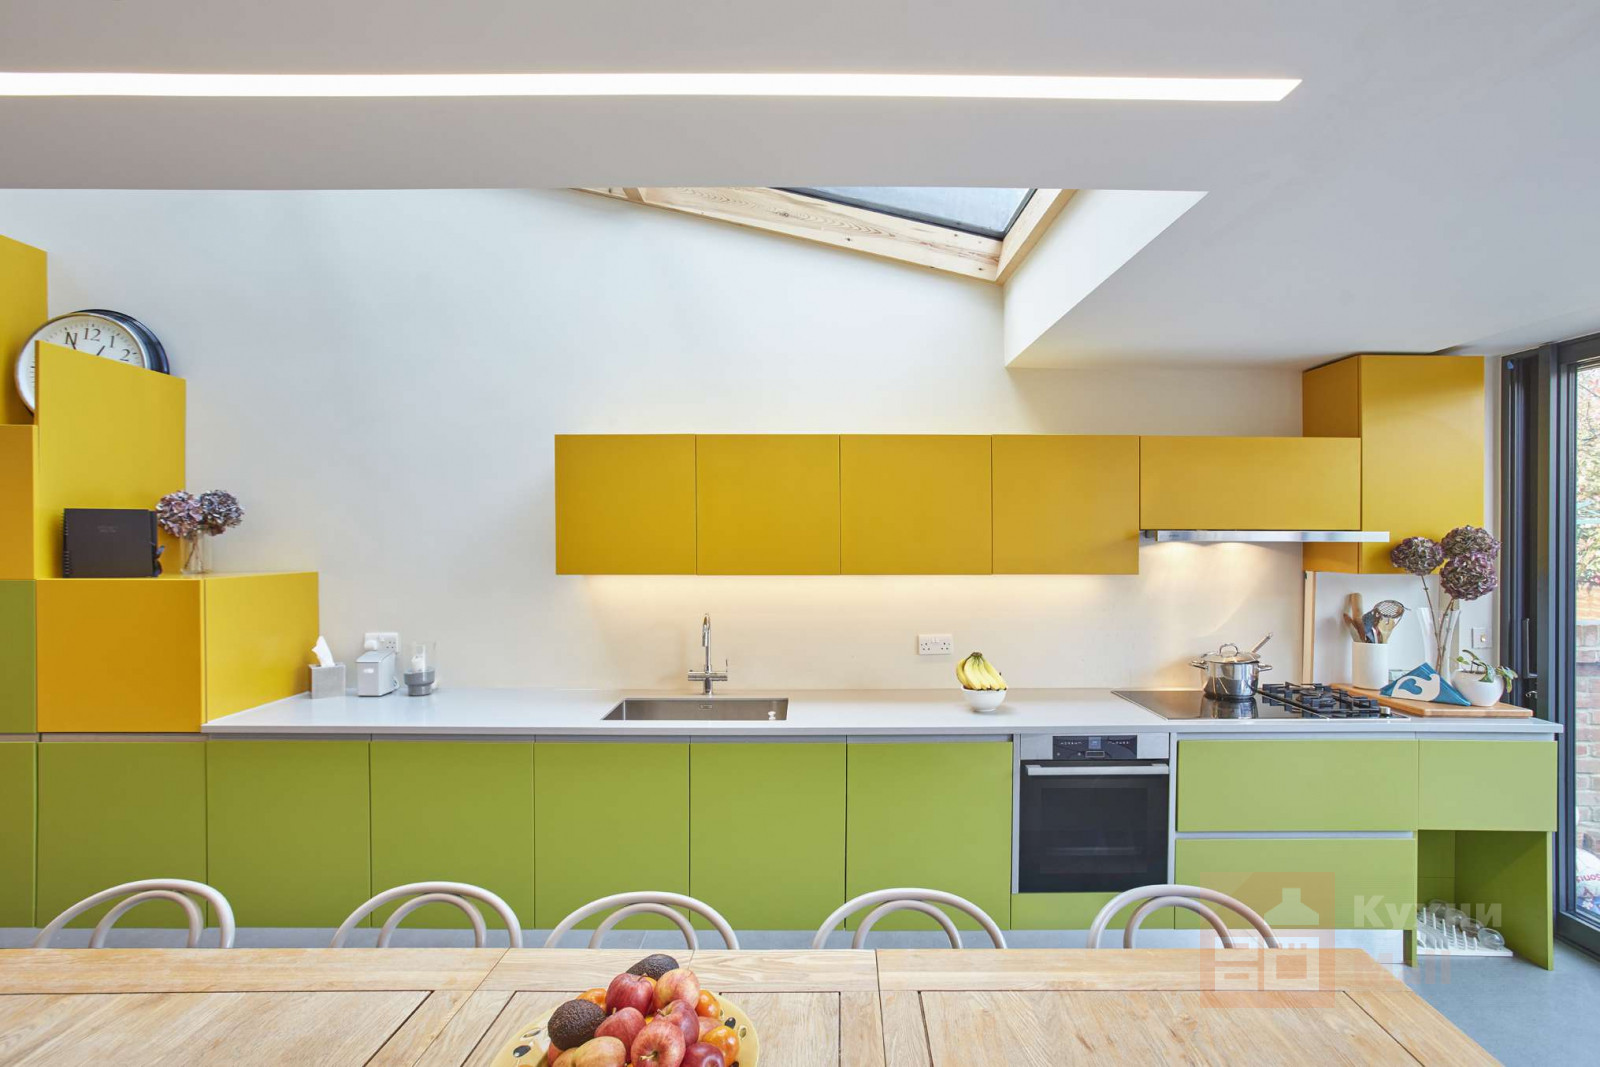 Купить желтую кухню. Желтые кухни. Желто зеленая кухня. Кухня в желтом цвете. Кухня в желто зеленых тонах.